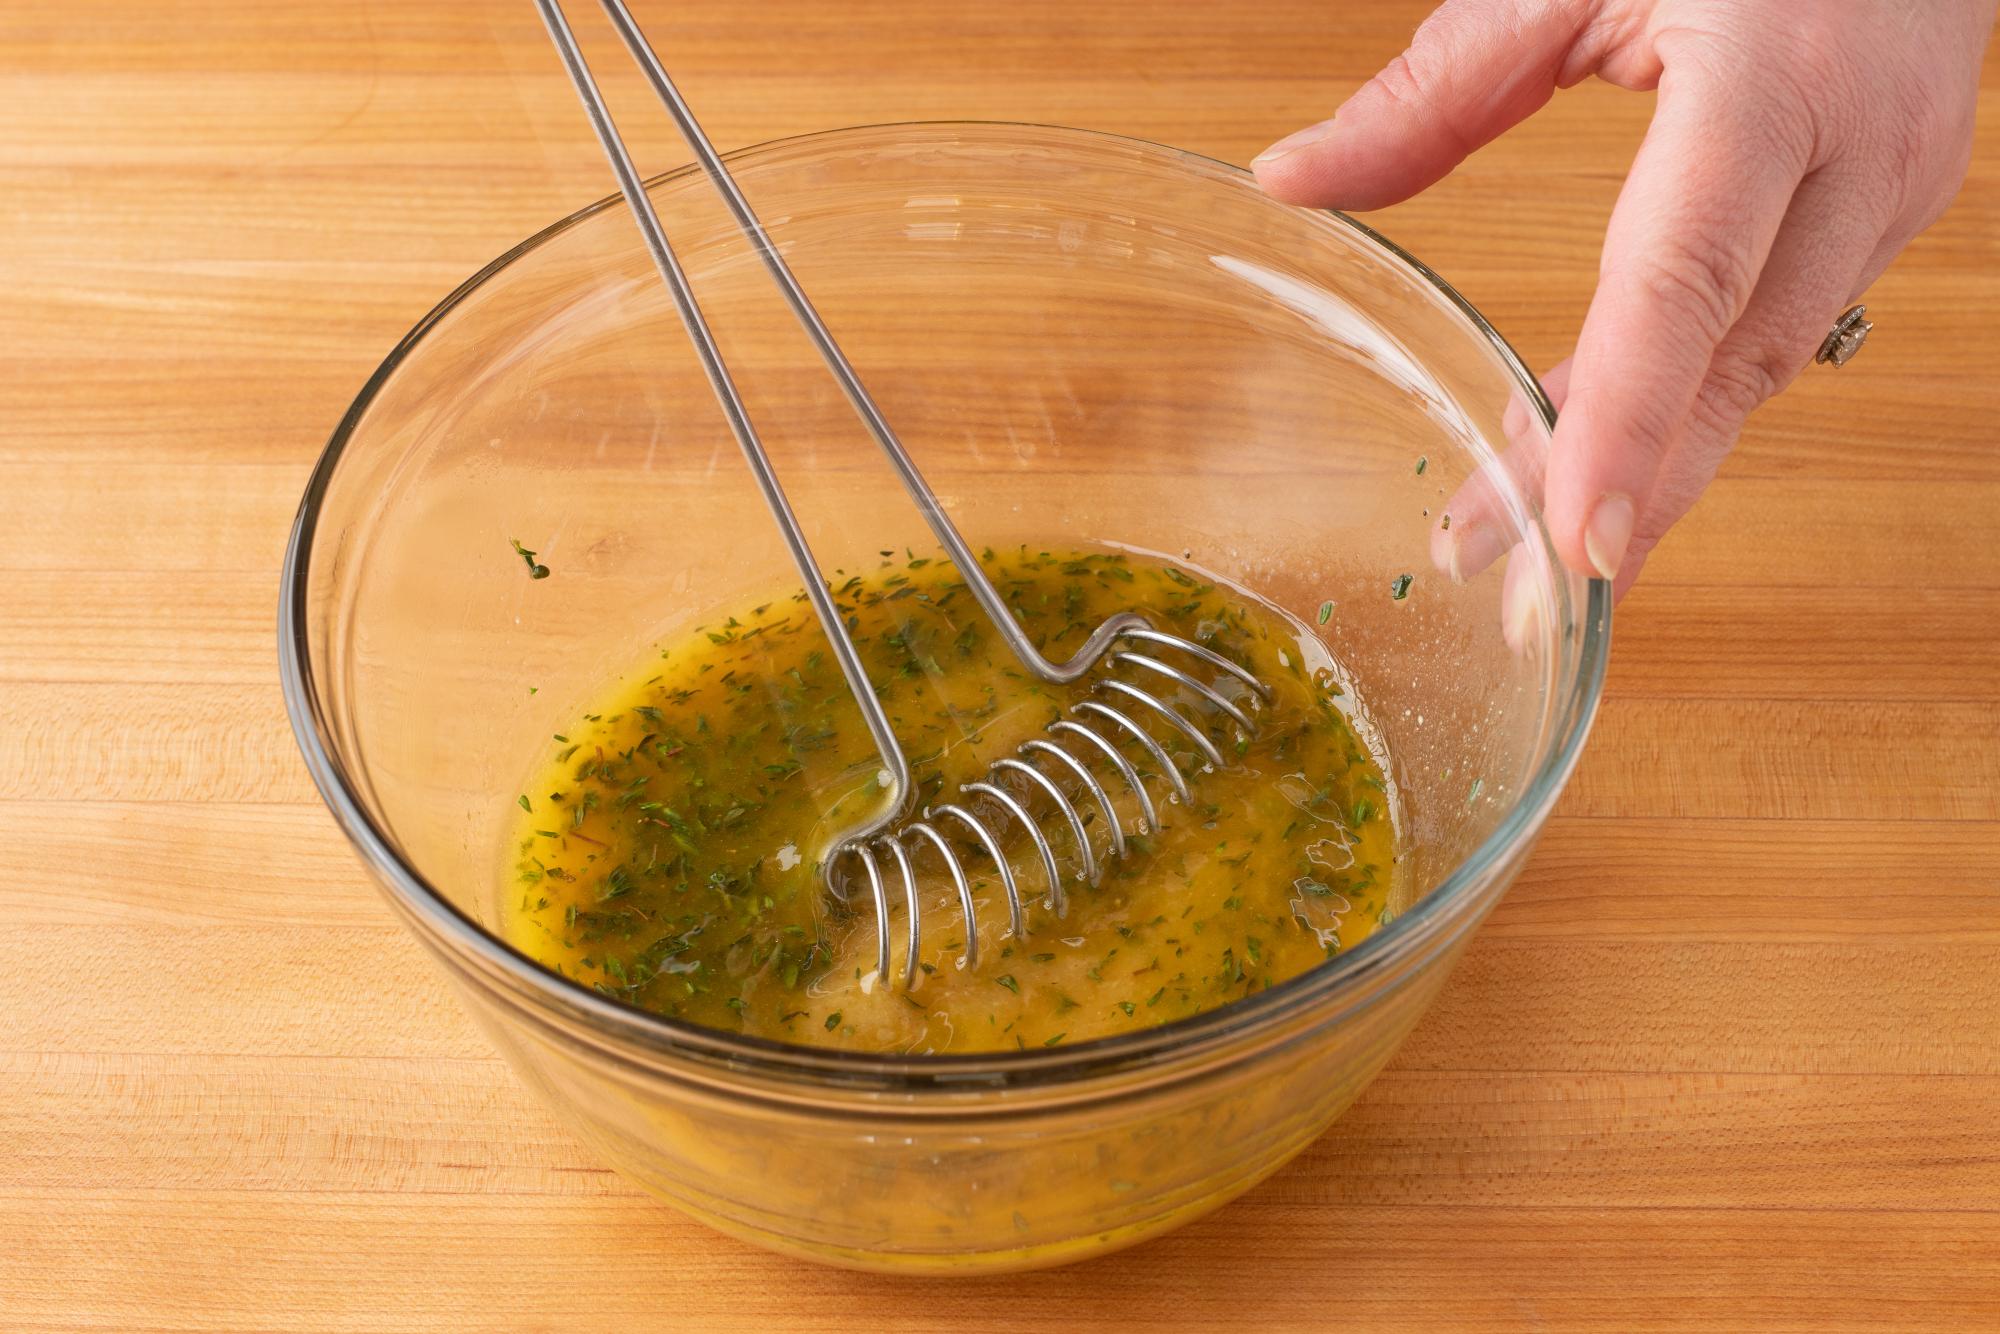 Use a Mix Stir to mix the vinaigrette.